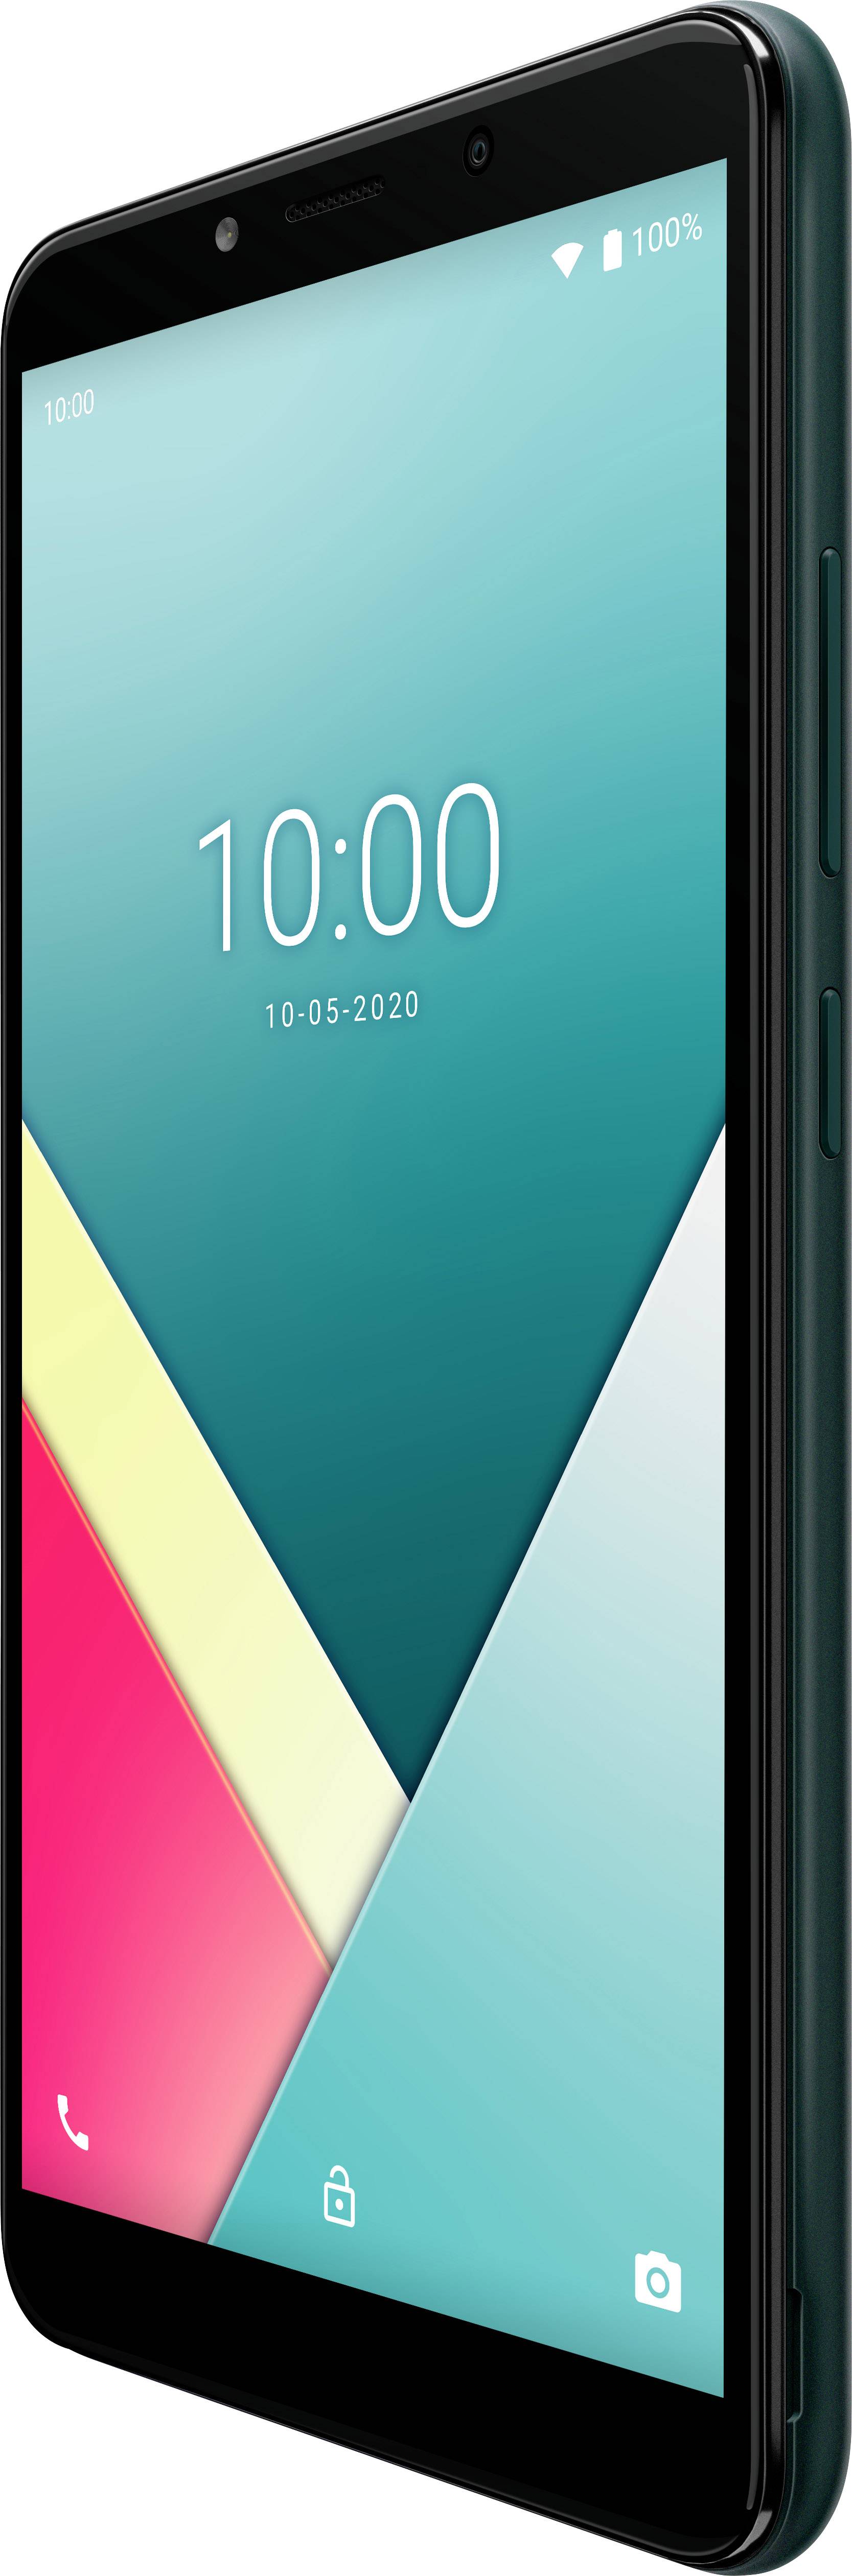 WIKO Y61 Dual SIM smartphone 16 GB 6 inch (15.2 cm) Dual SIM Android ...